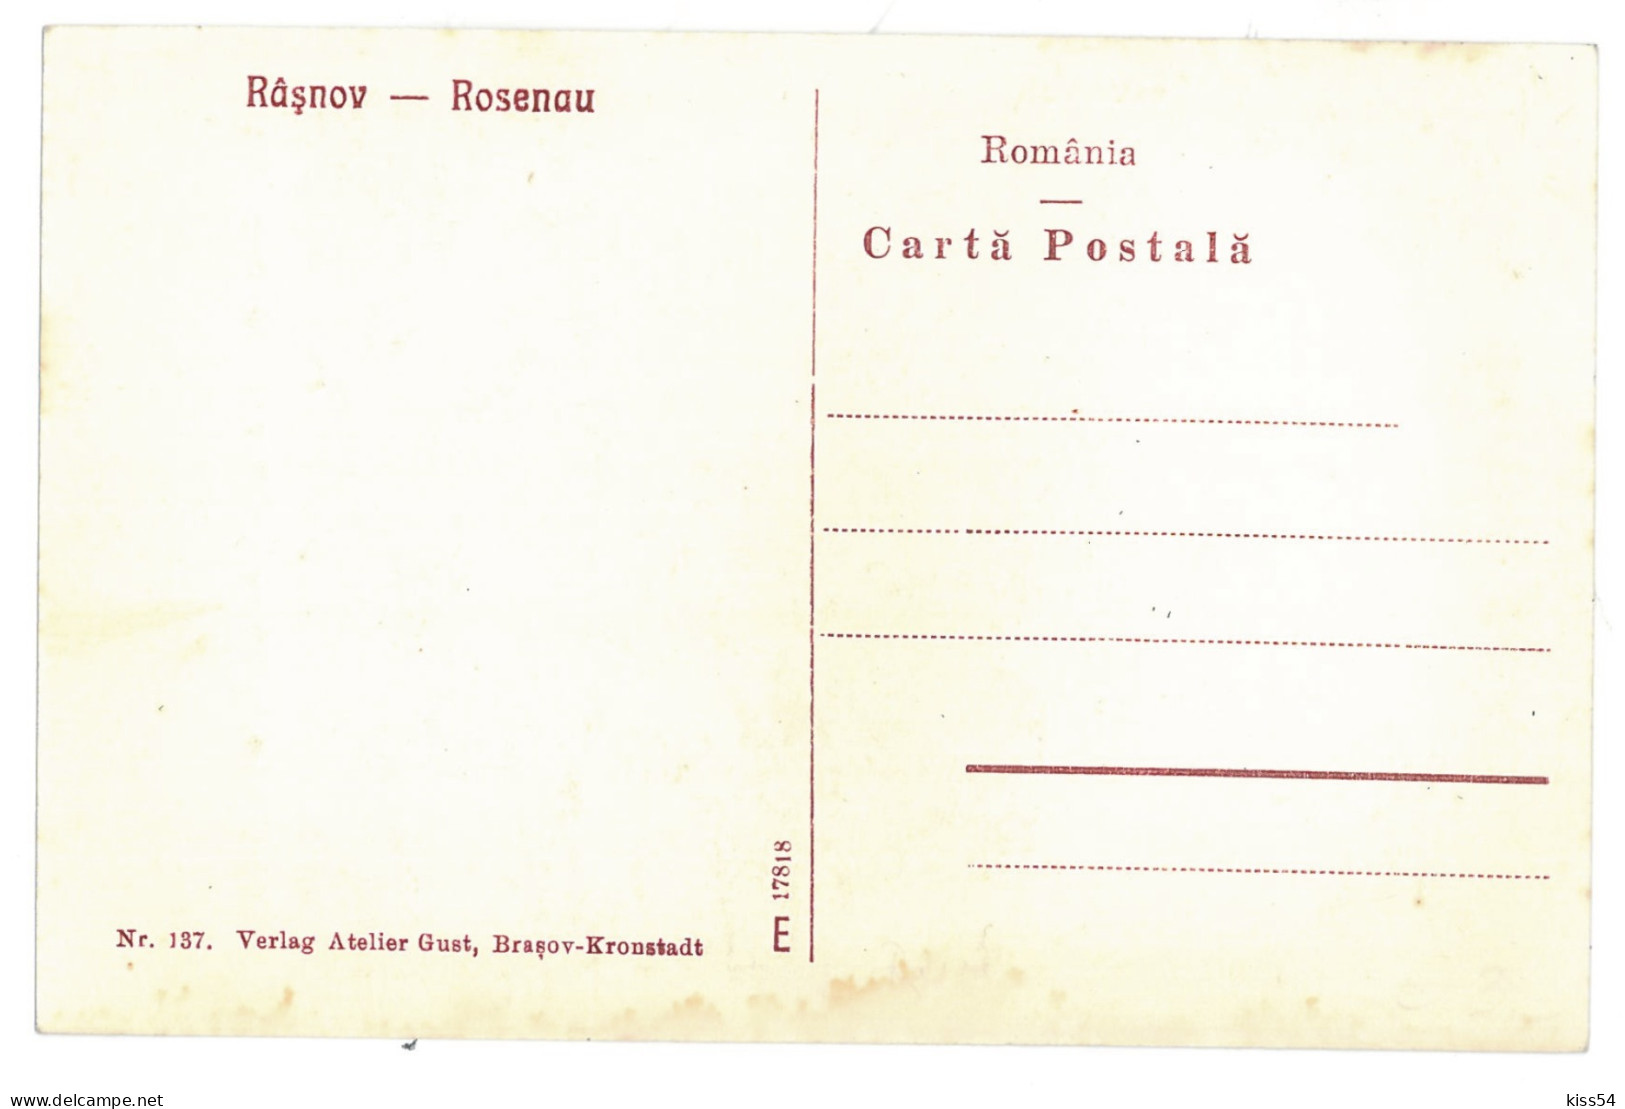 RO 69 - 12230 RASNOV, Brasov, Romania - Old Postcard - Unused - Romania